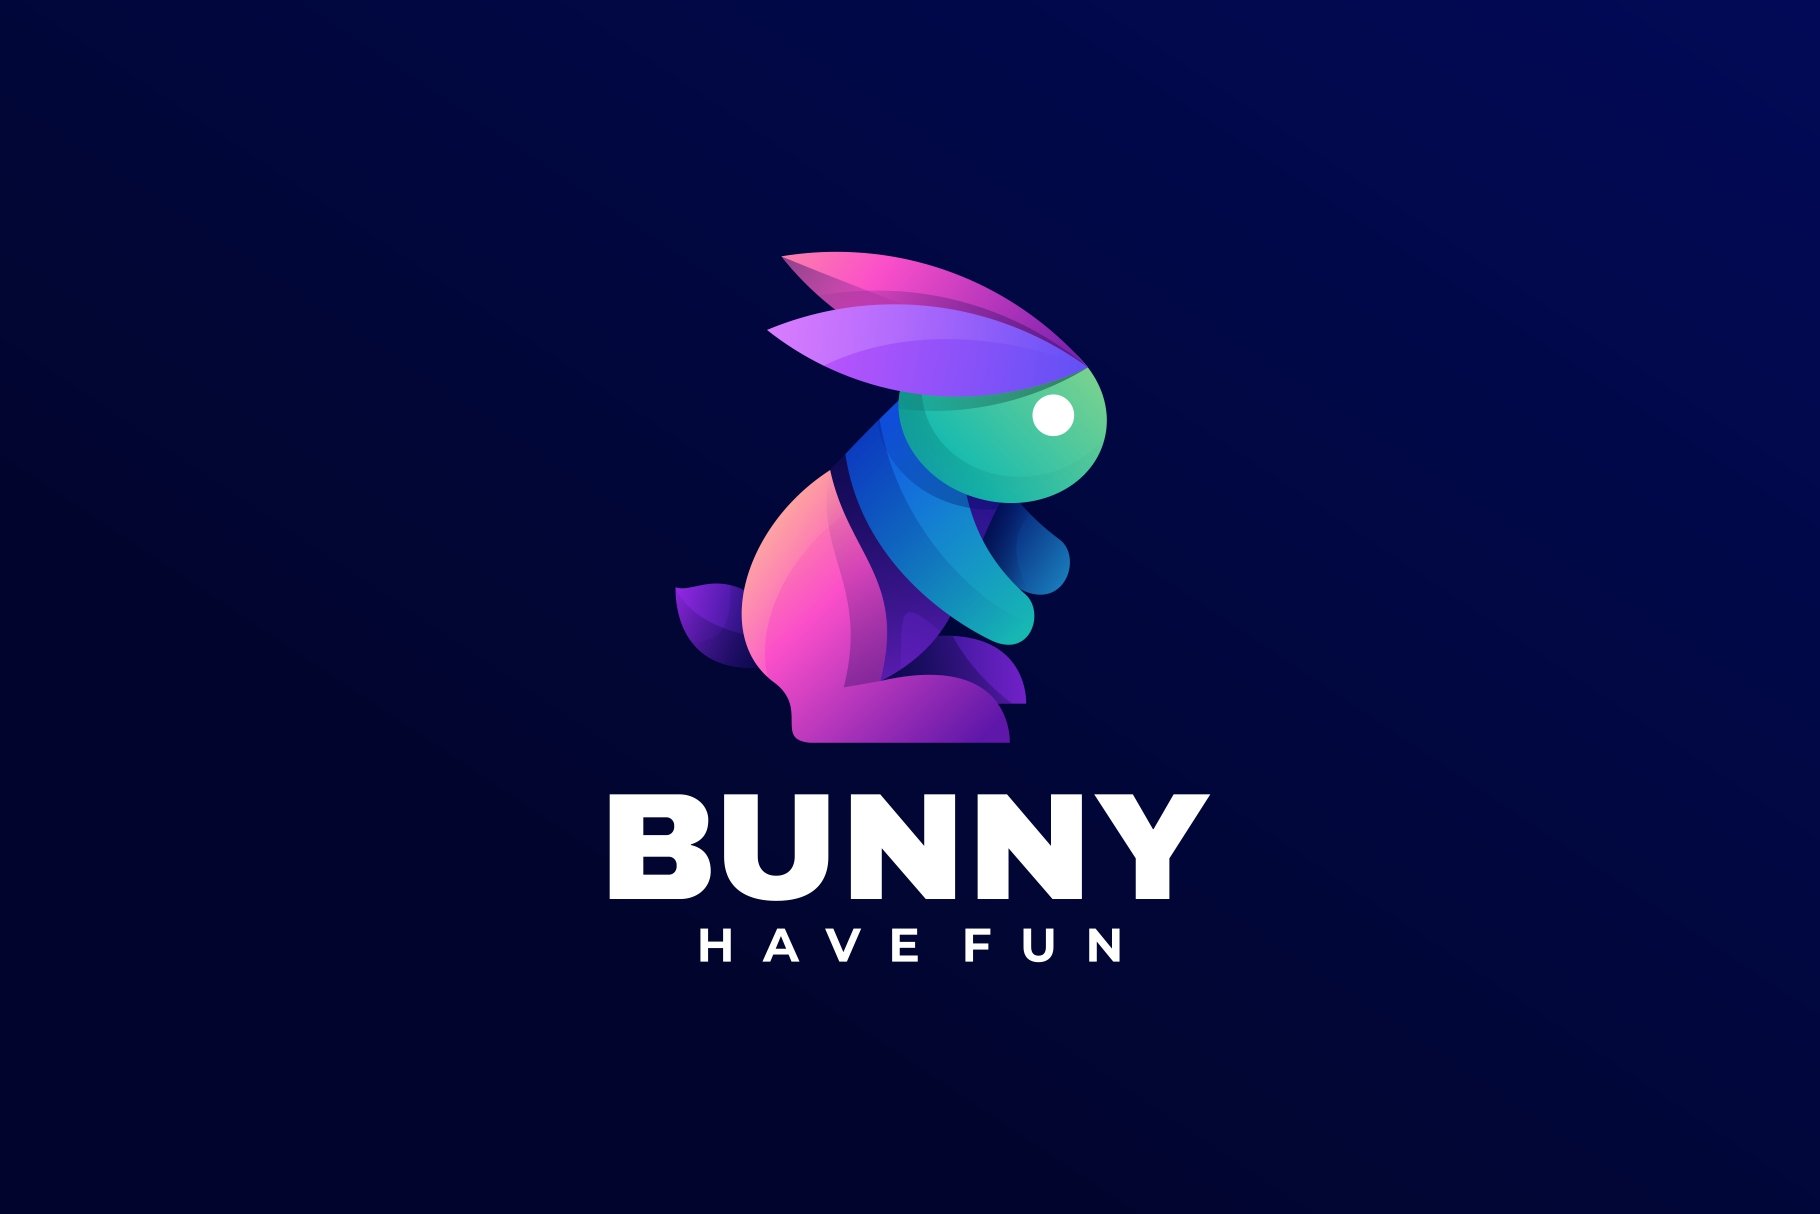 Bunny Gradient Logo cover image.